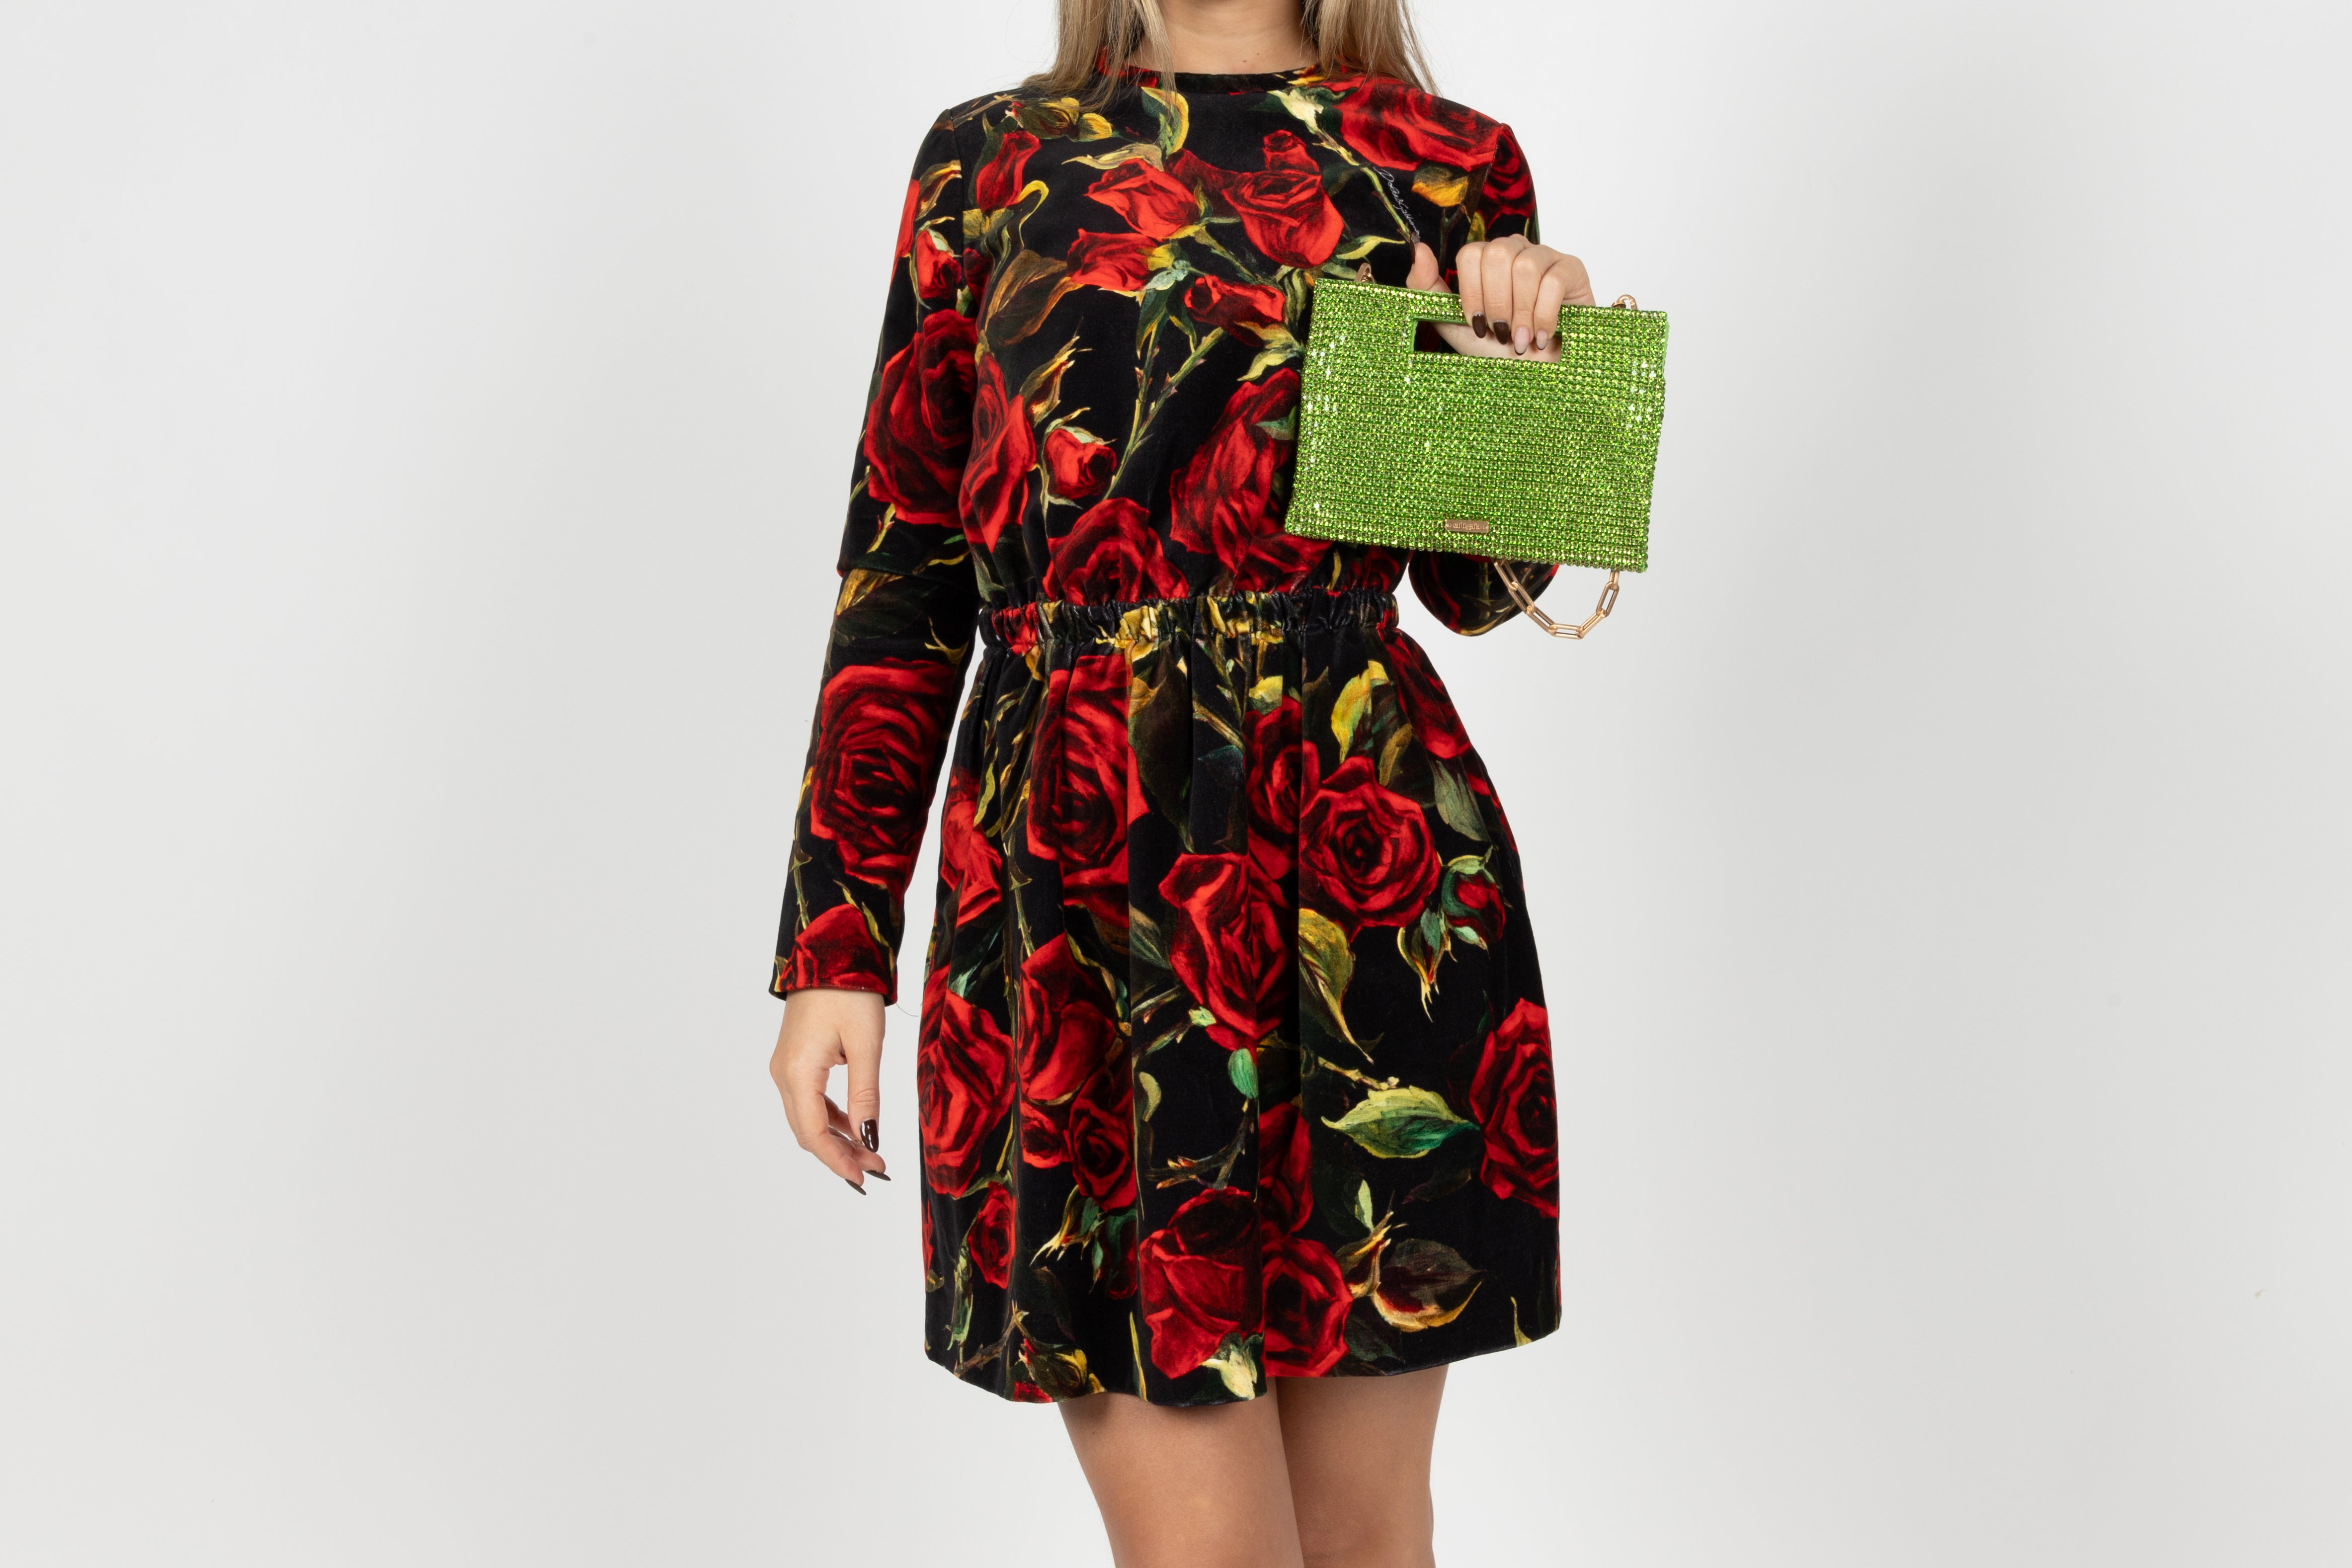 Something Borrowed Dolce & Gabbana Dress with Red Roses to rent, kledingverhuur